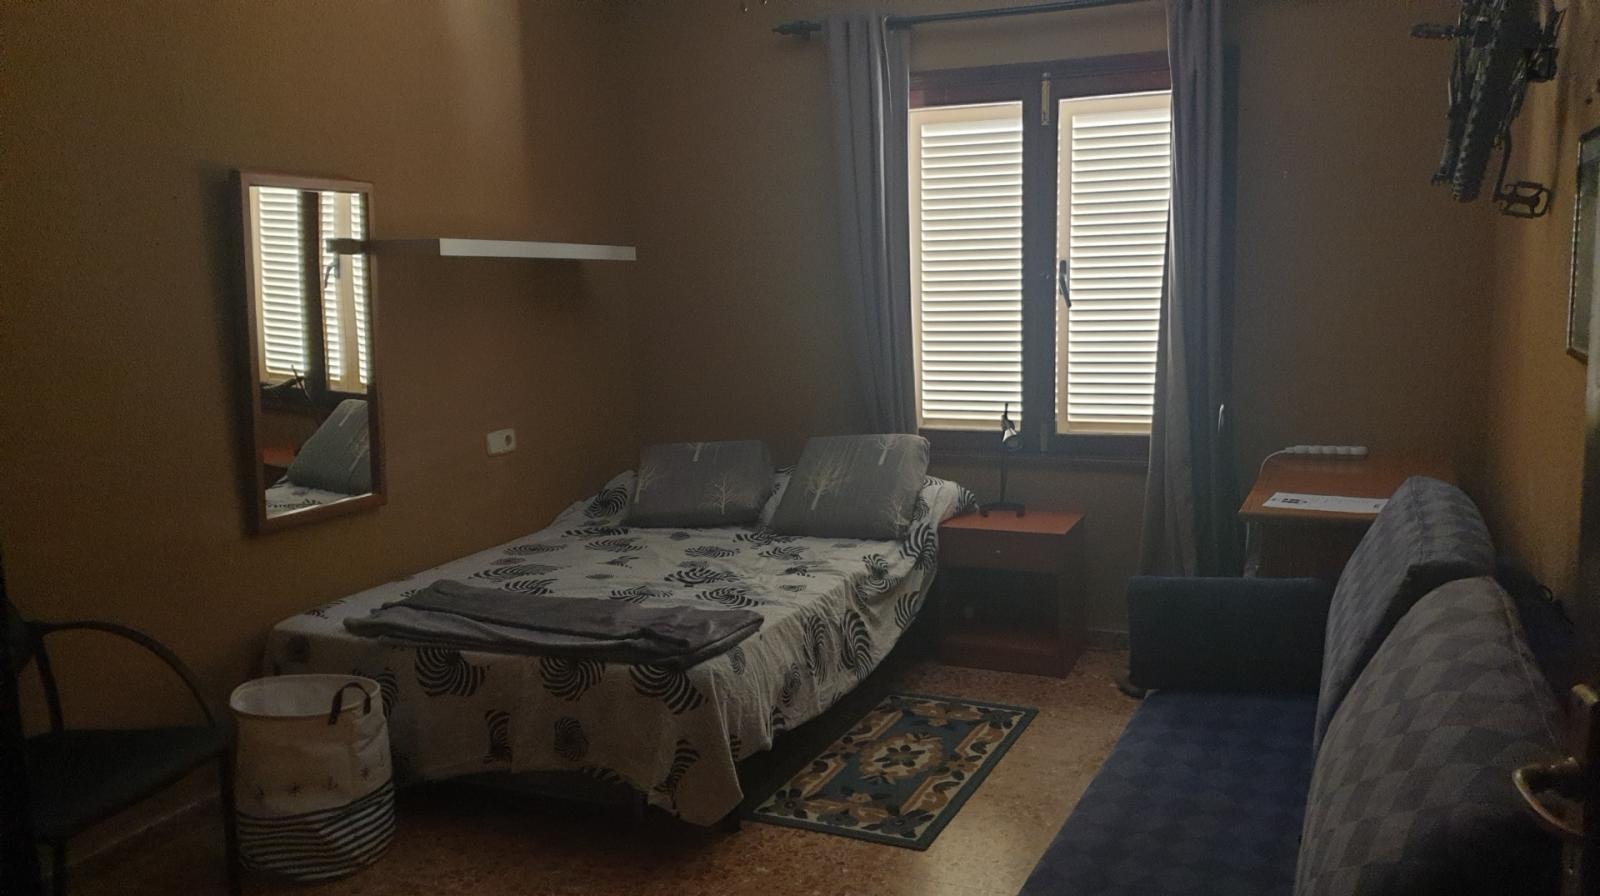 Inviting single bedroom in Palma close to Palau d'Esports Son Moix